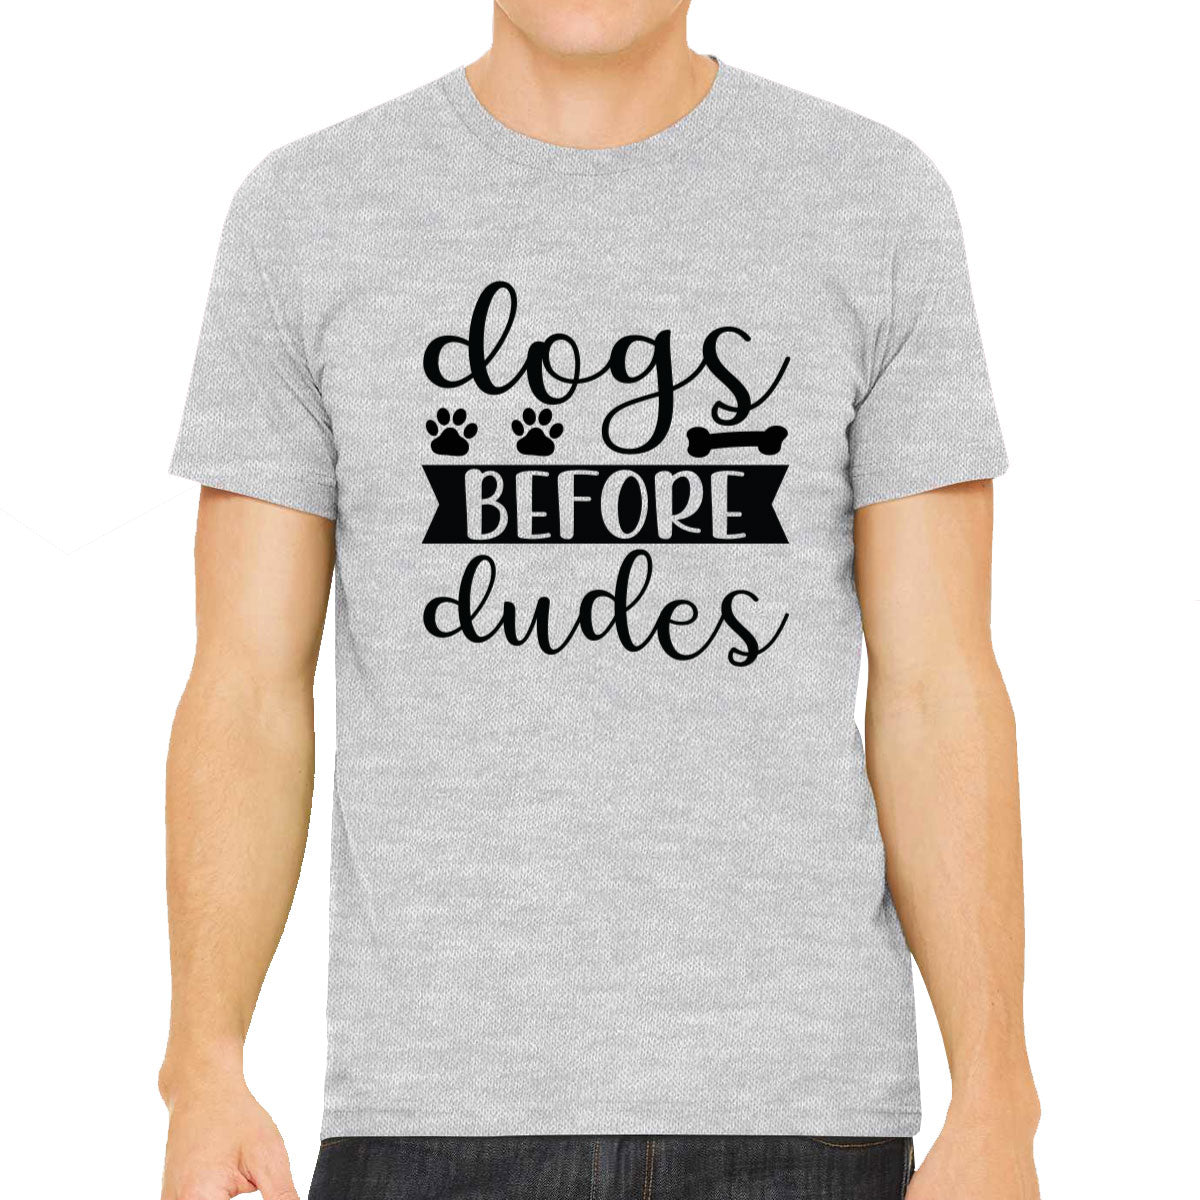 Dogs Before Dudes Men's T-shirt